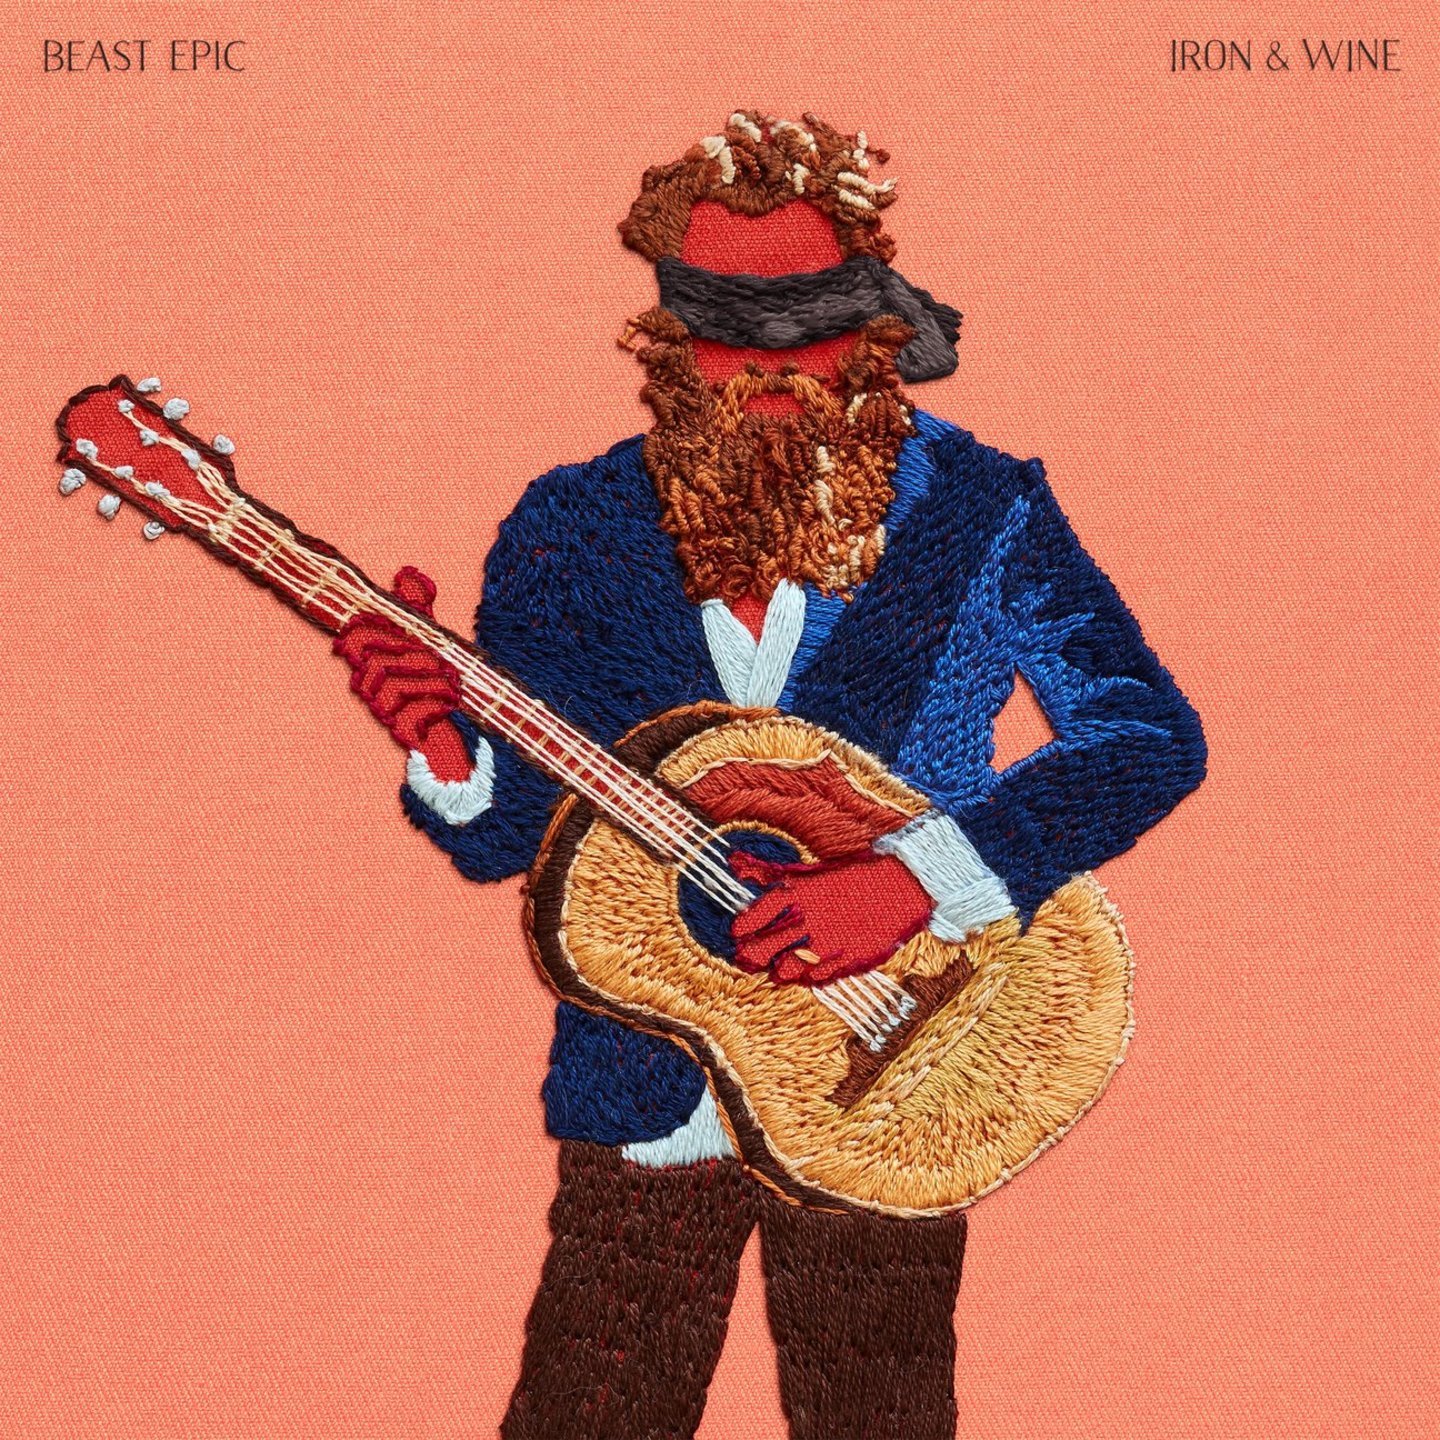 IRON & WINE - Beast Epic LP